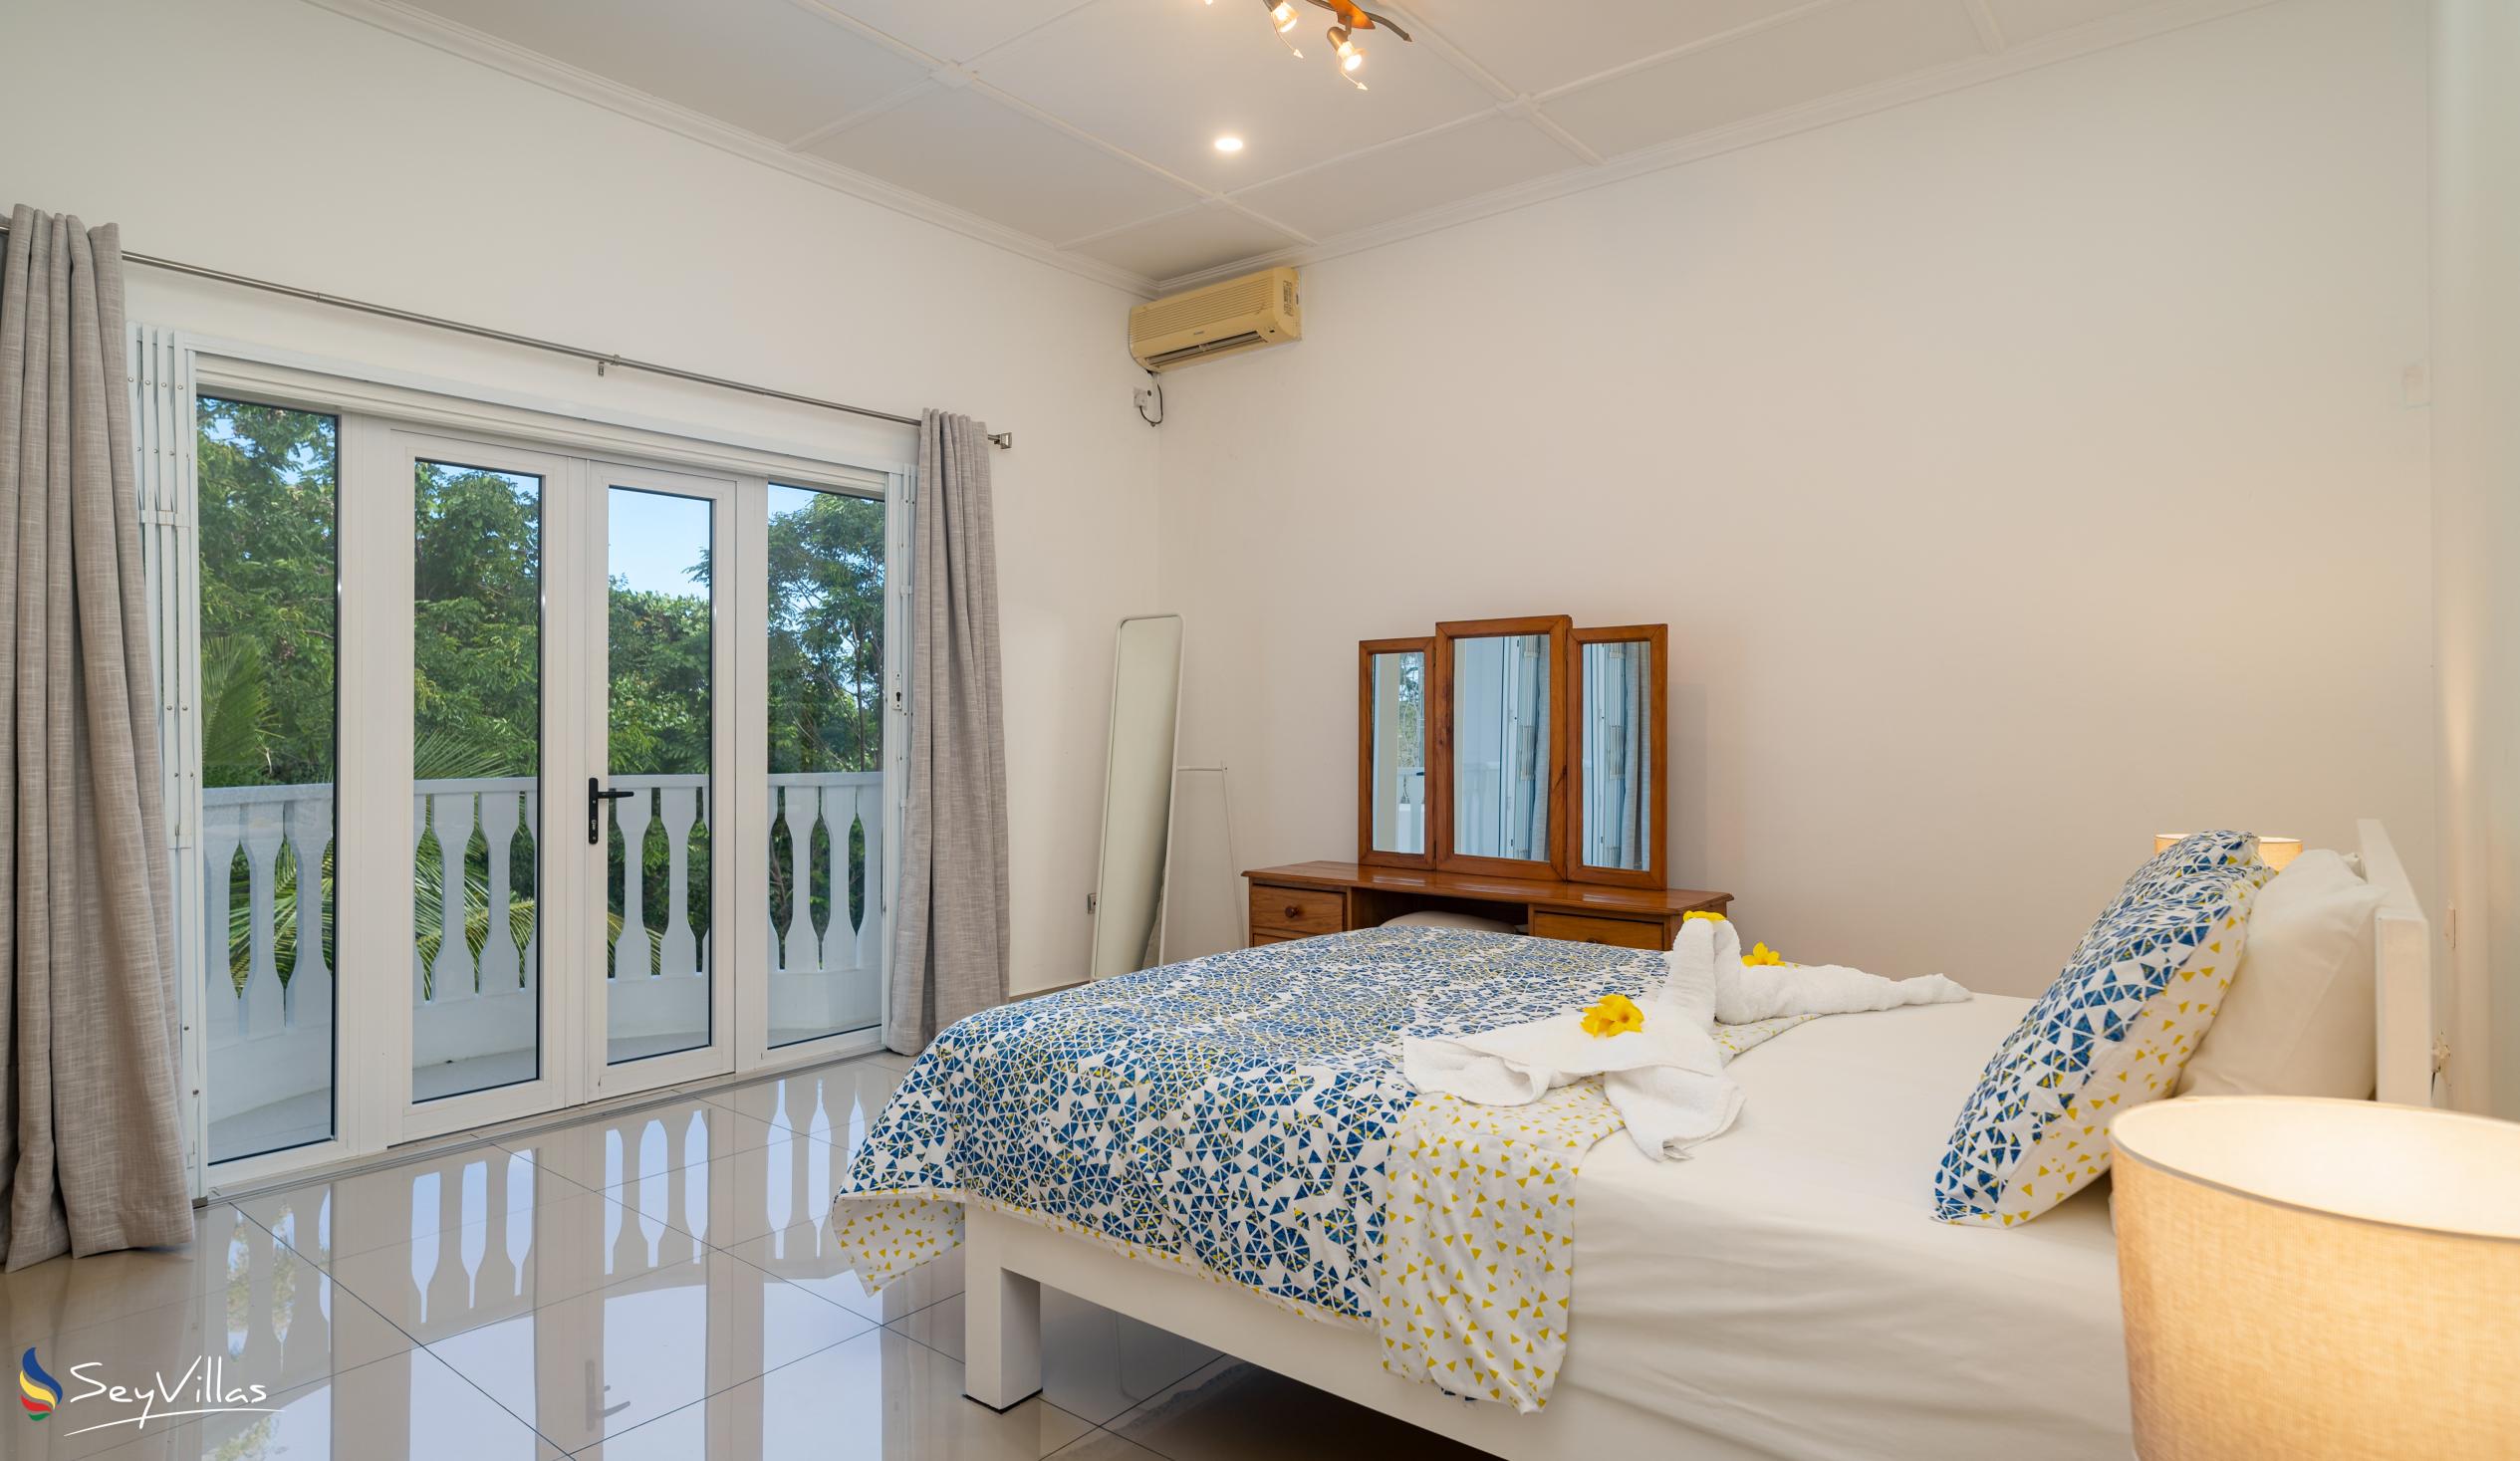 Foto 71: Villa Jasmin - Villa mit 2 Schlafzimmern - Mahé (Seychellen)